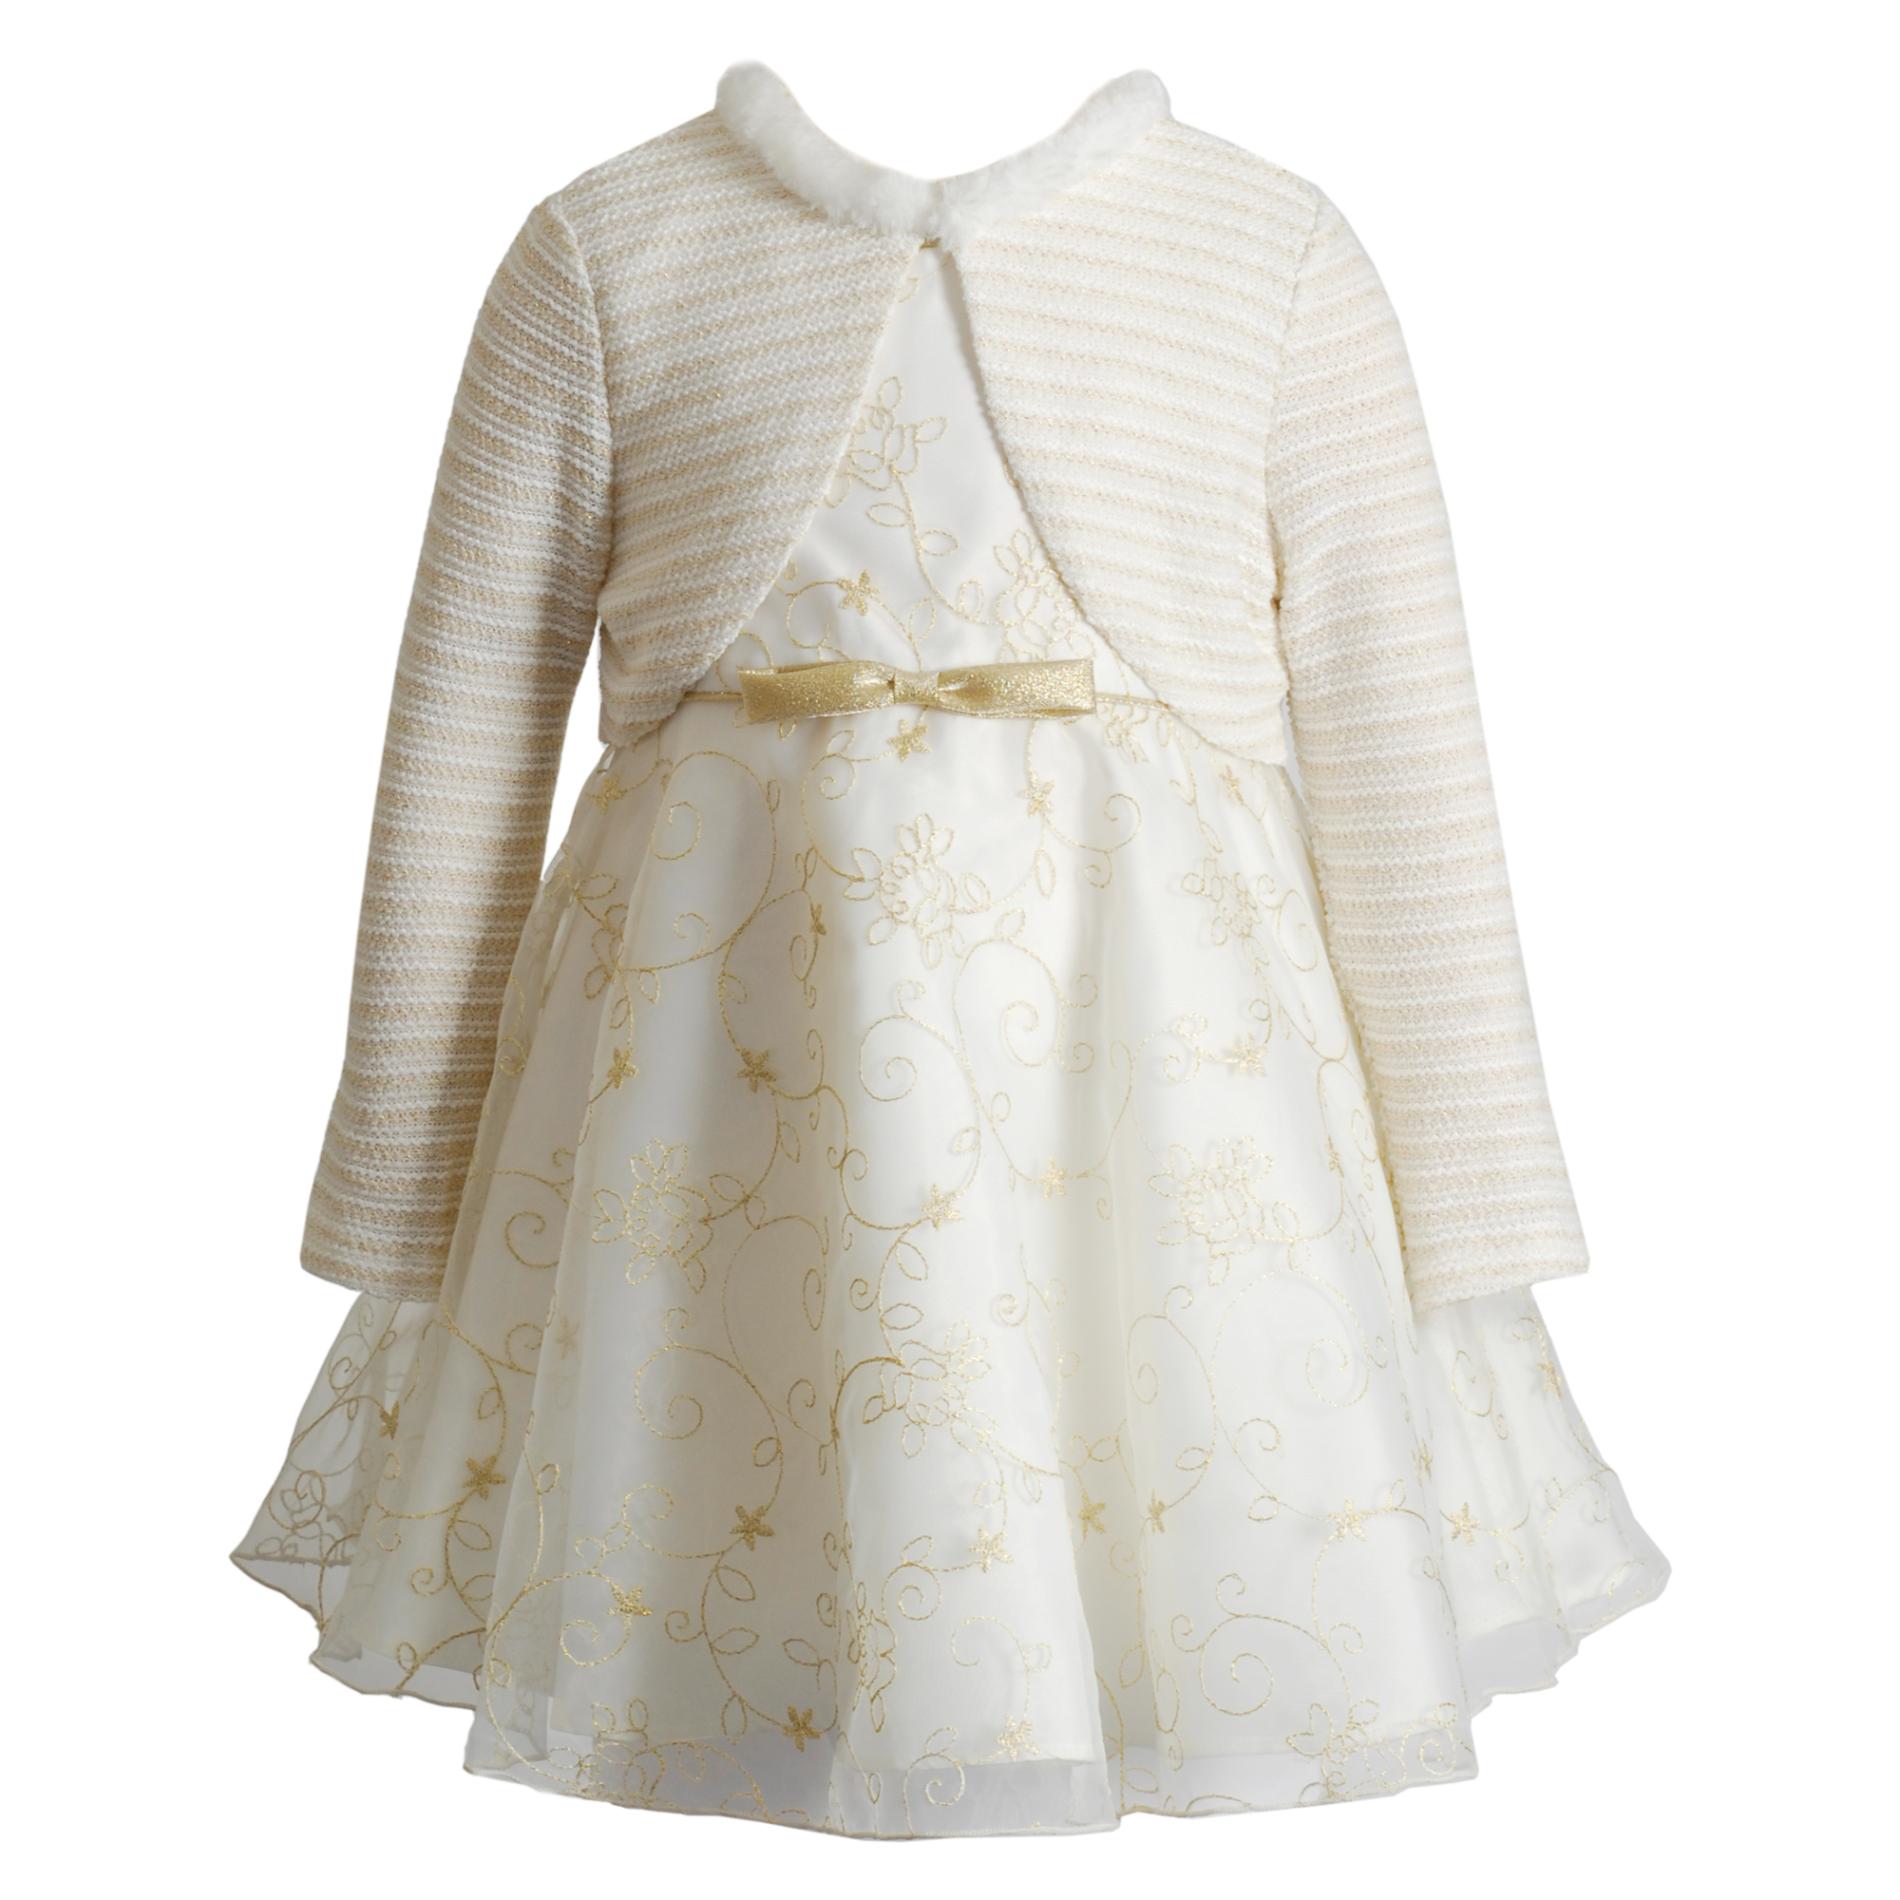 Youngland Infant & Toddler Girl's Occasion Dress & Shrug - Floral